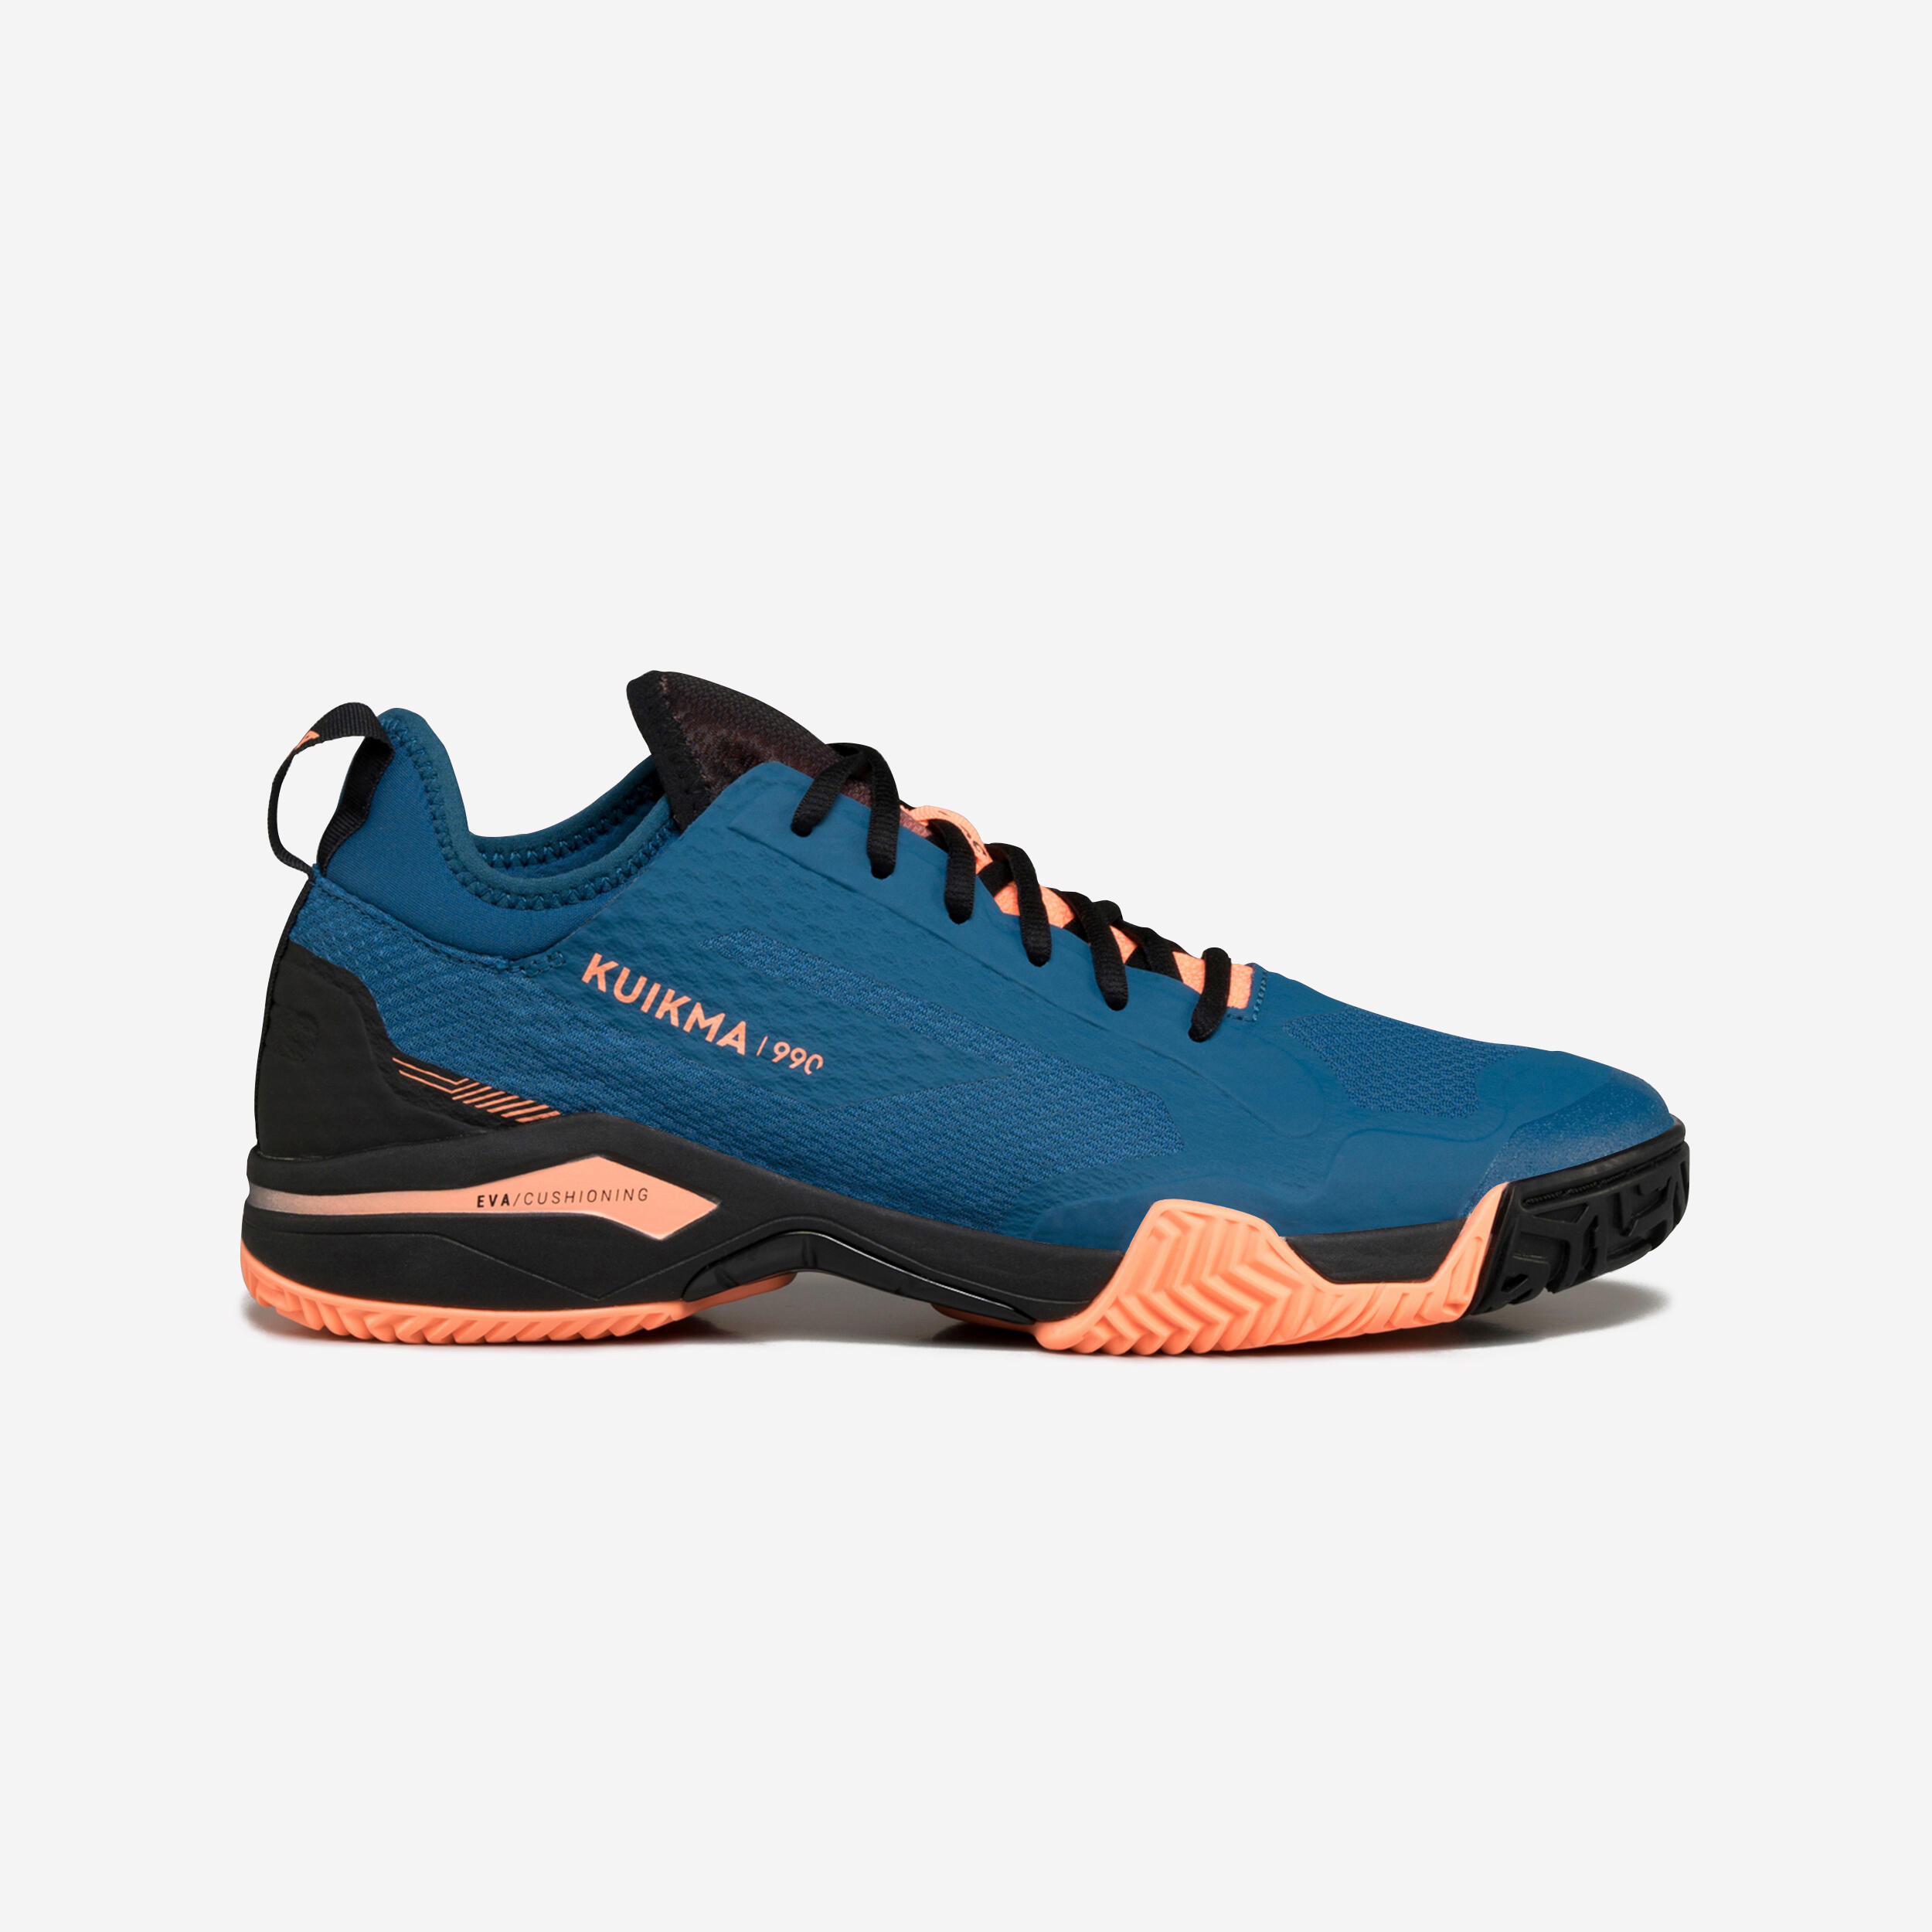 Decathlon | Scarpe padel uomo PS 990 DYNAMIC blu-arancione |  Kuikma